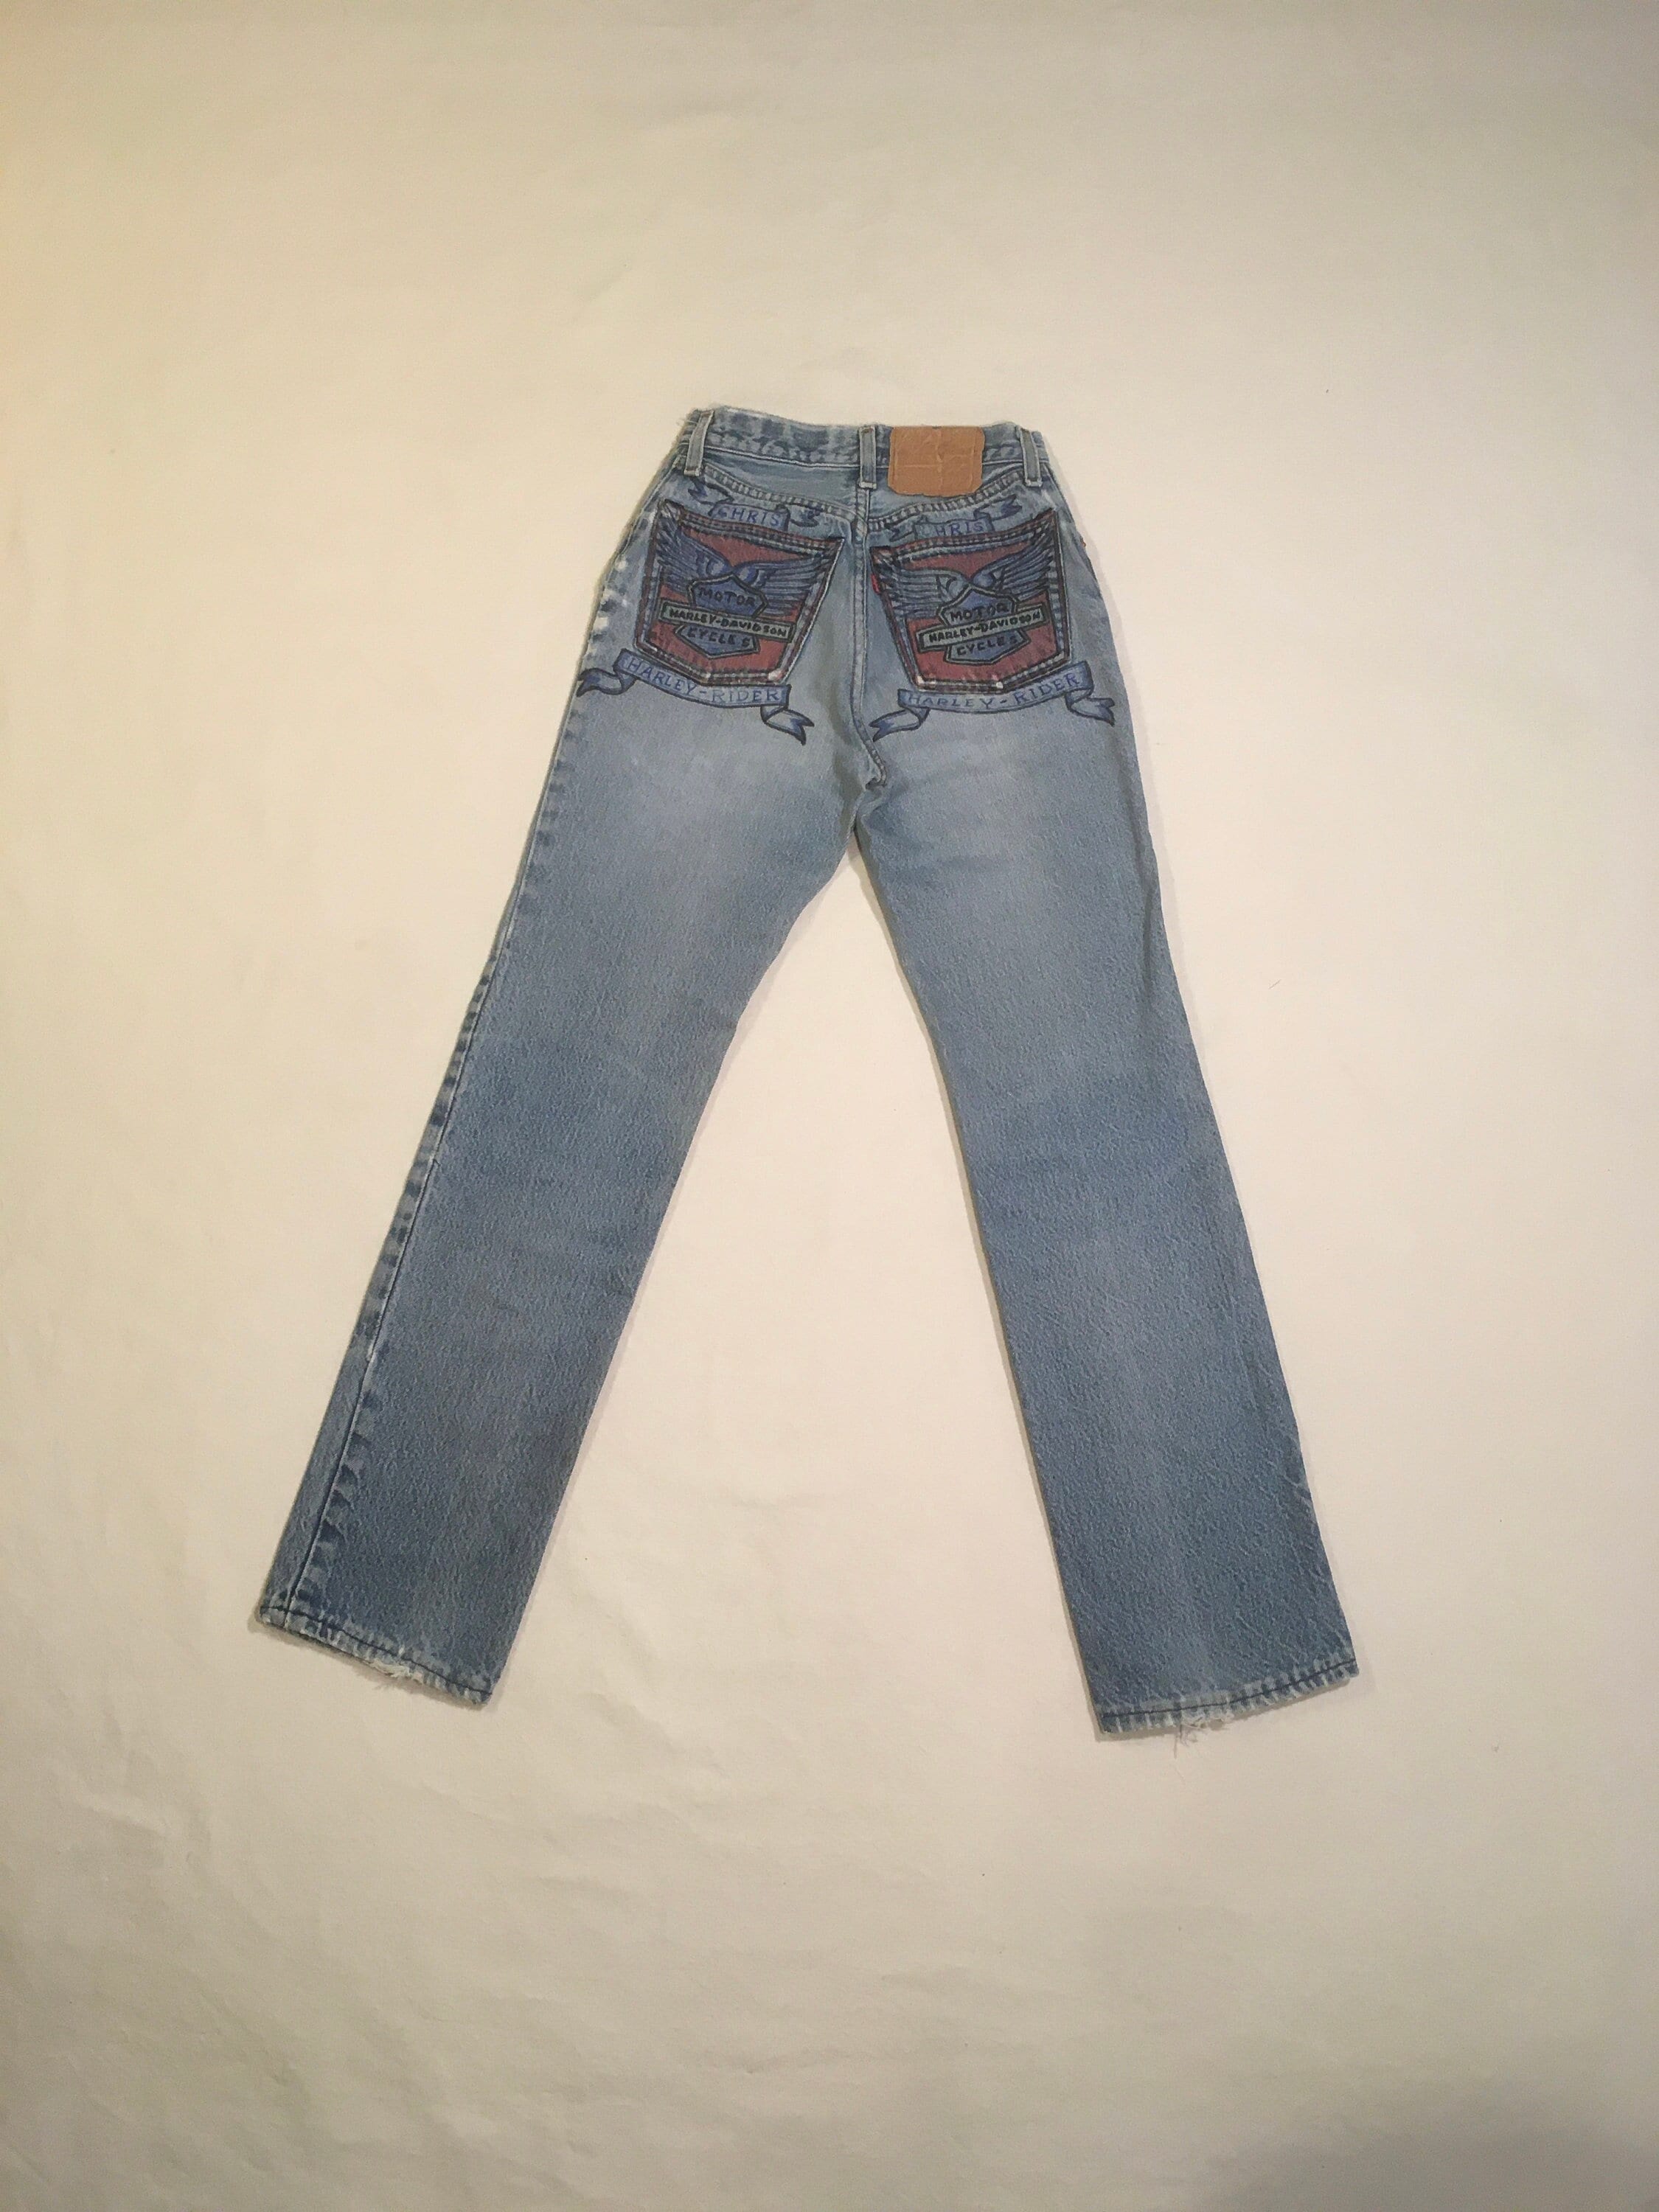 Vintage Levis 501 Xx Blue Jeans 4 Button up Harley Davidson Black 